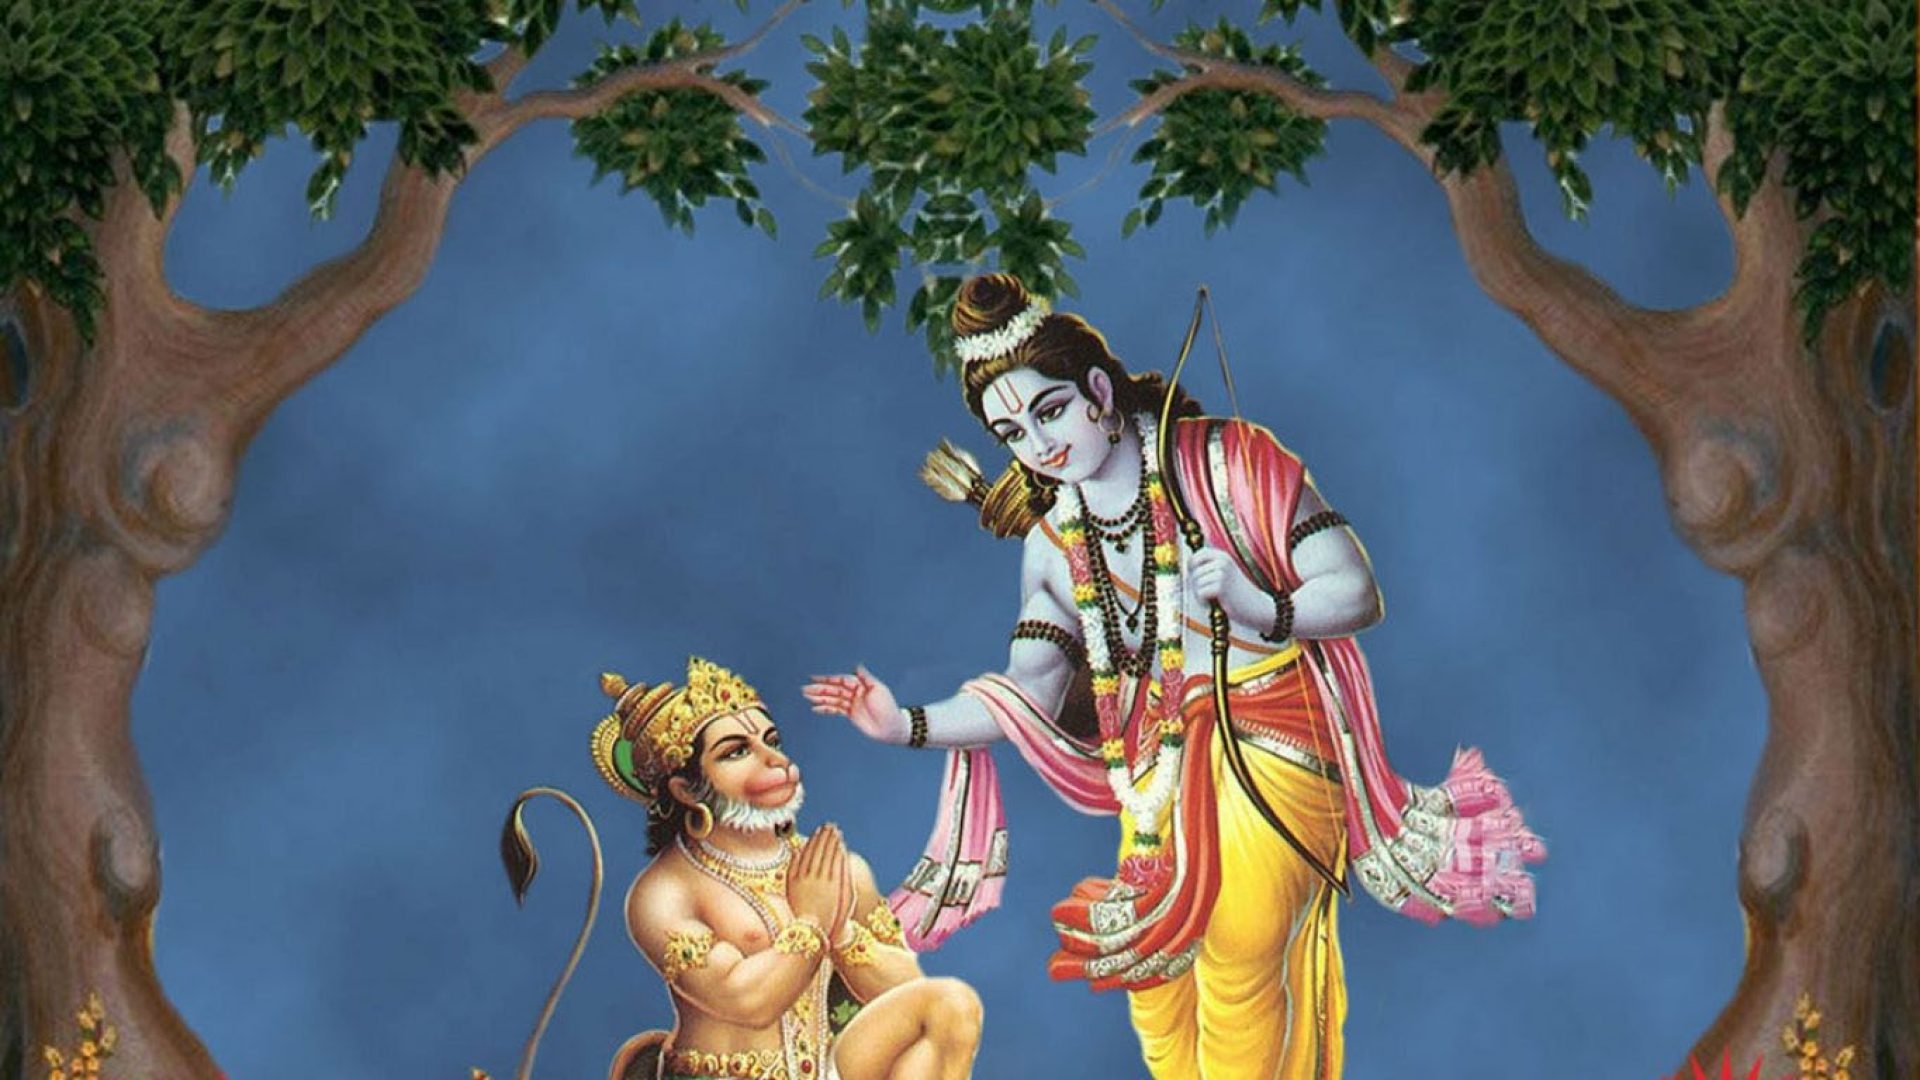  Shri Ram And Hanuman Wallpaper Hd Photo  MyGodImages